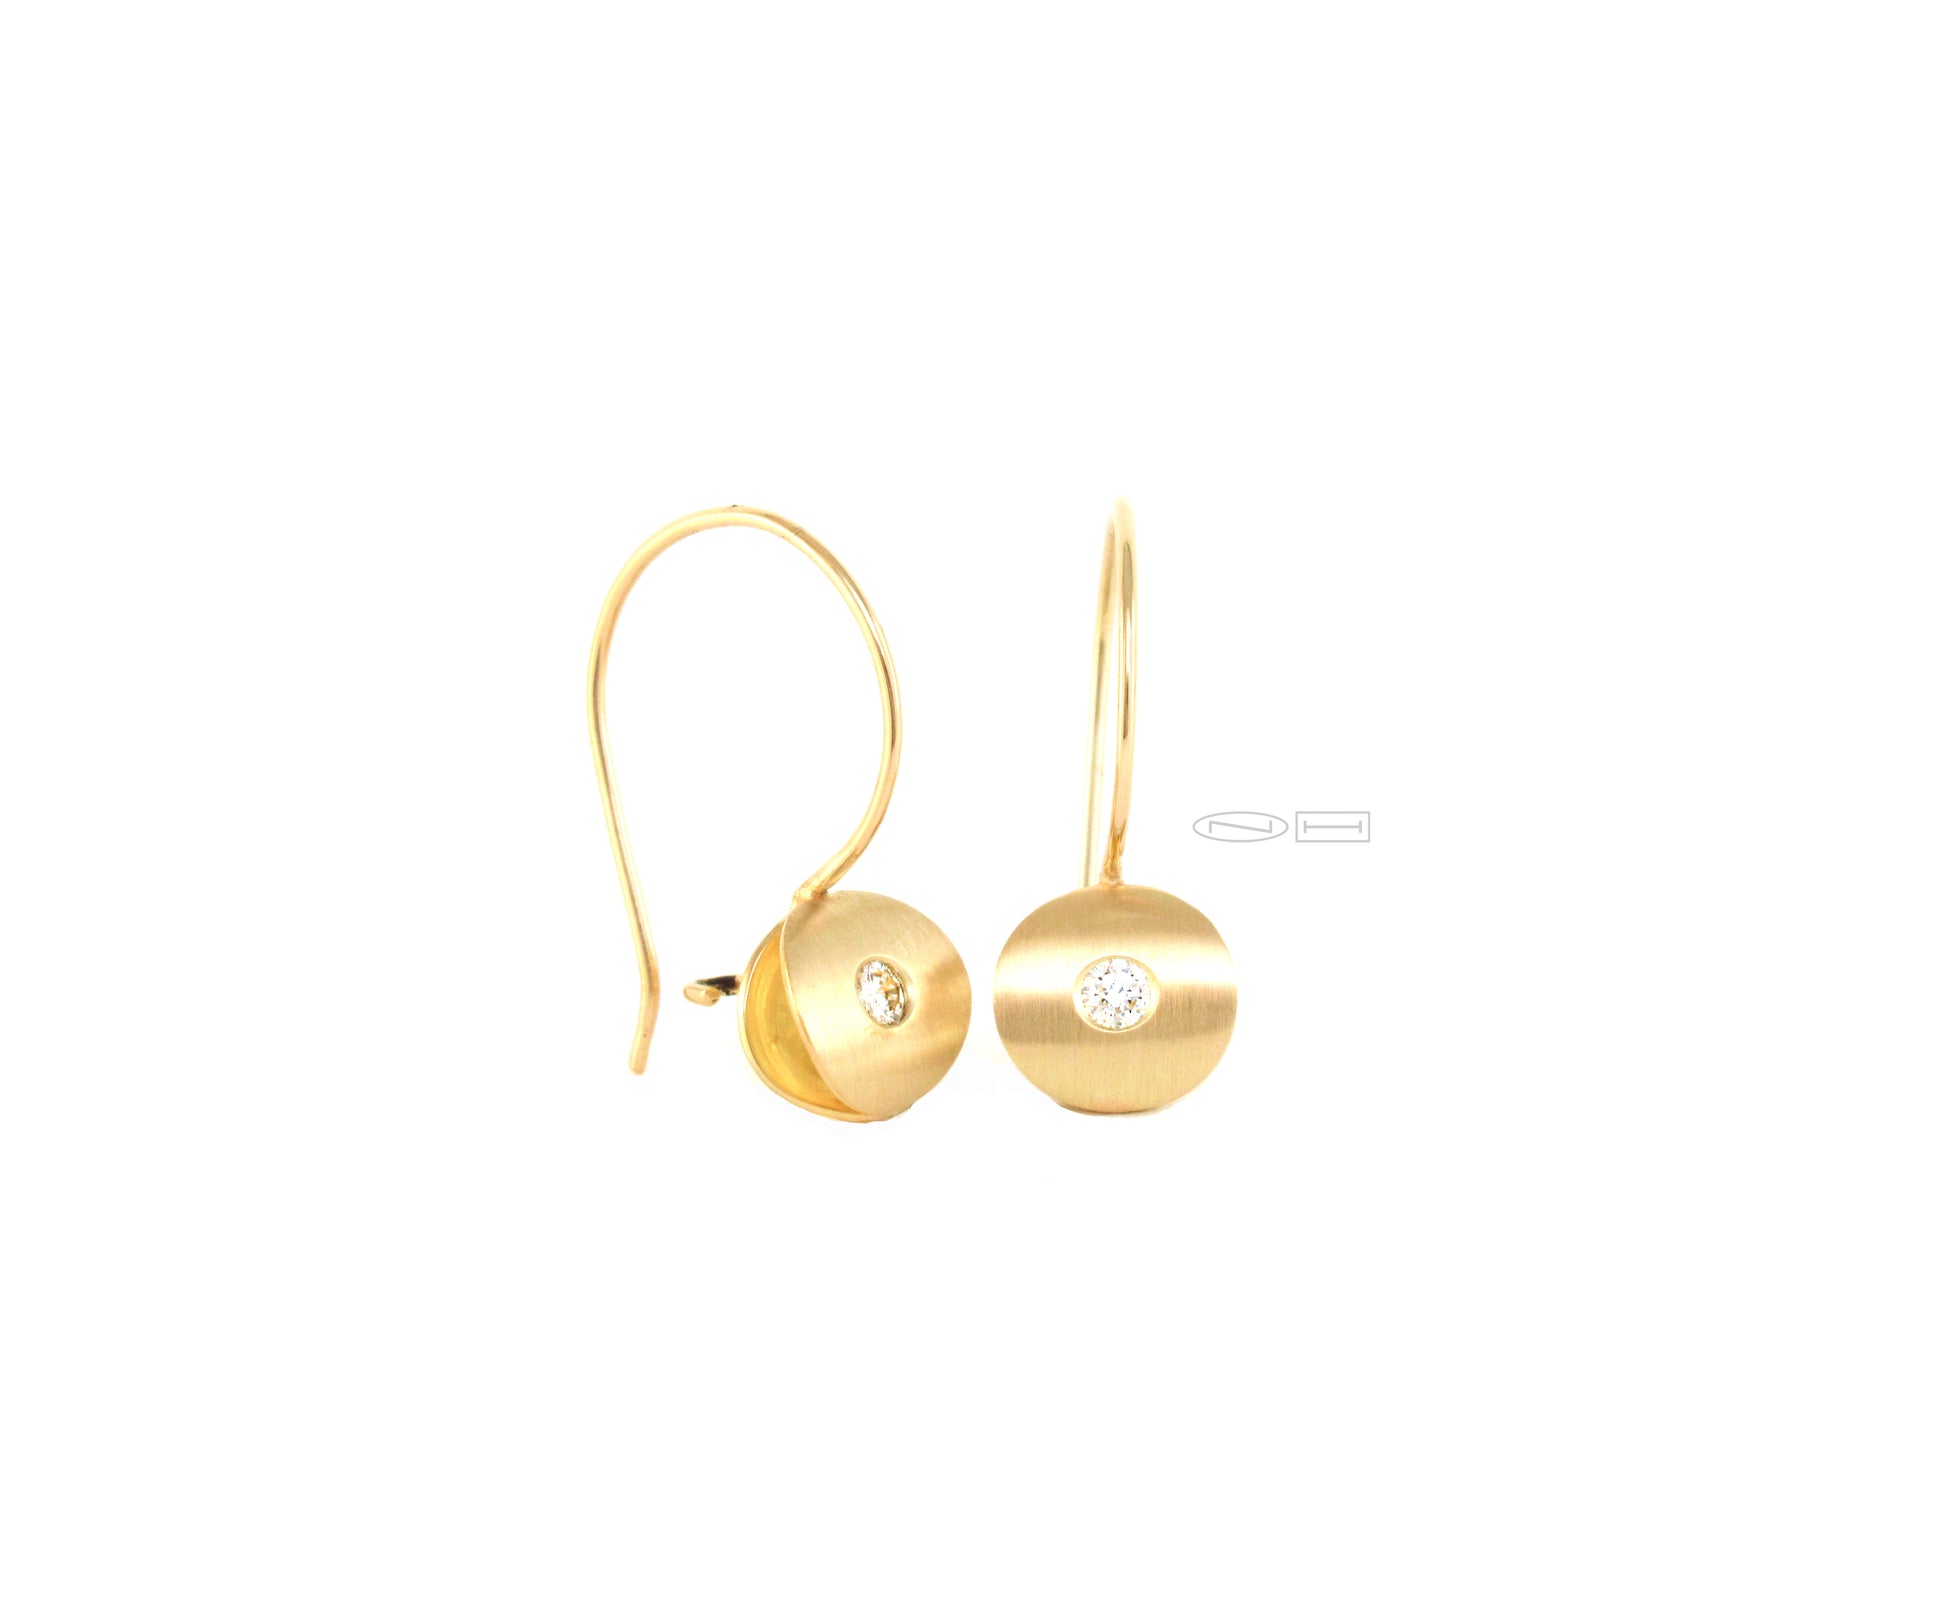 14kt yelow gold diamond earrings handcrafted by ZEALmetal, Nicole Horlor, Kingston, ON, Canada